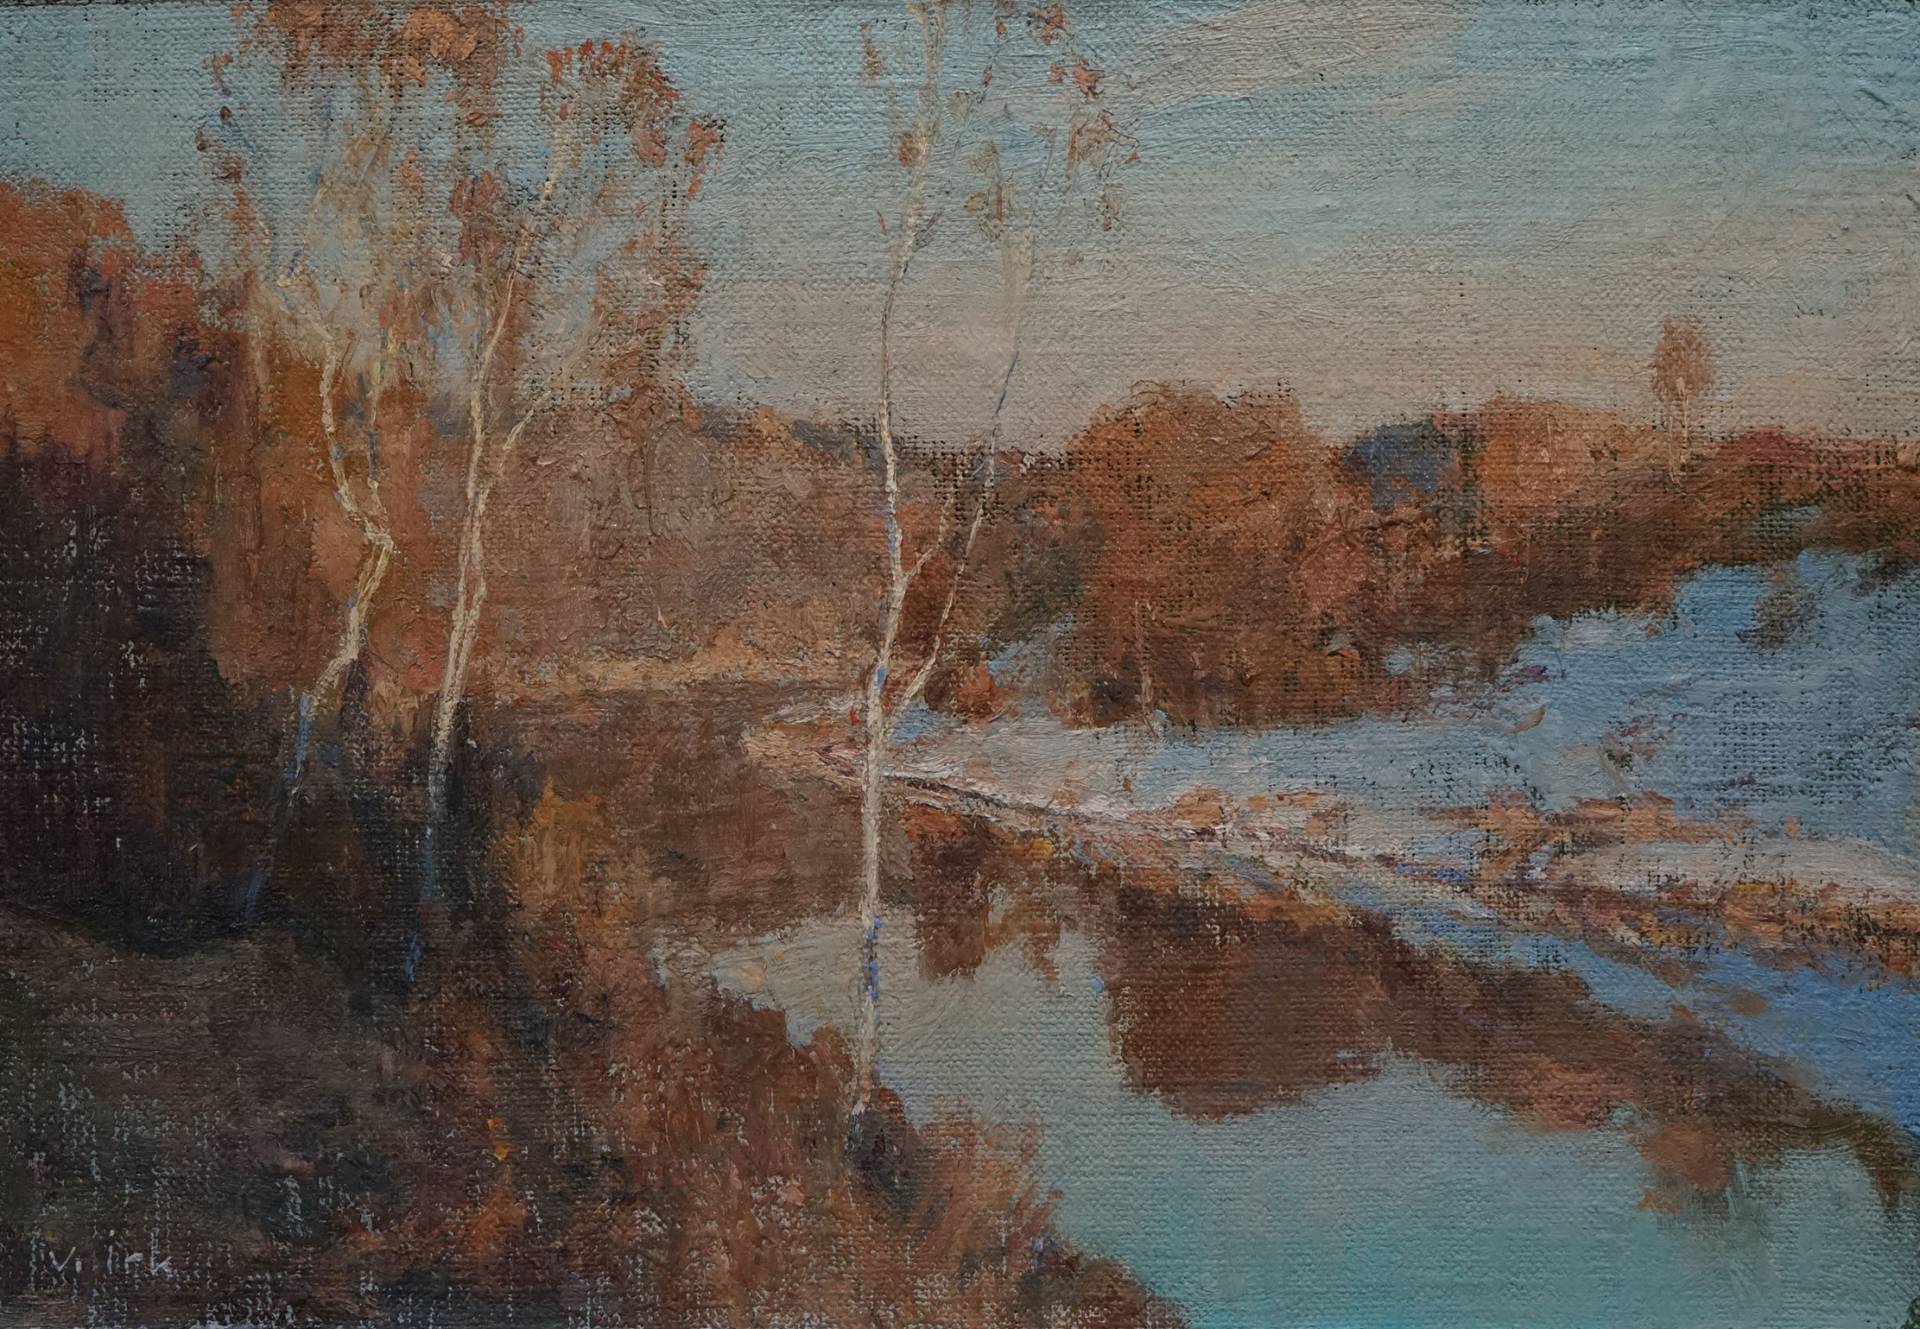 Birches - 1, Vladimir Kirillov, Buy the painting Oil